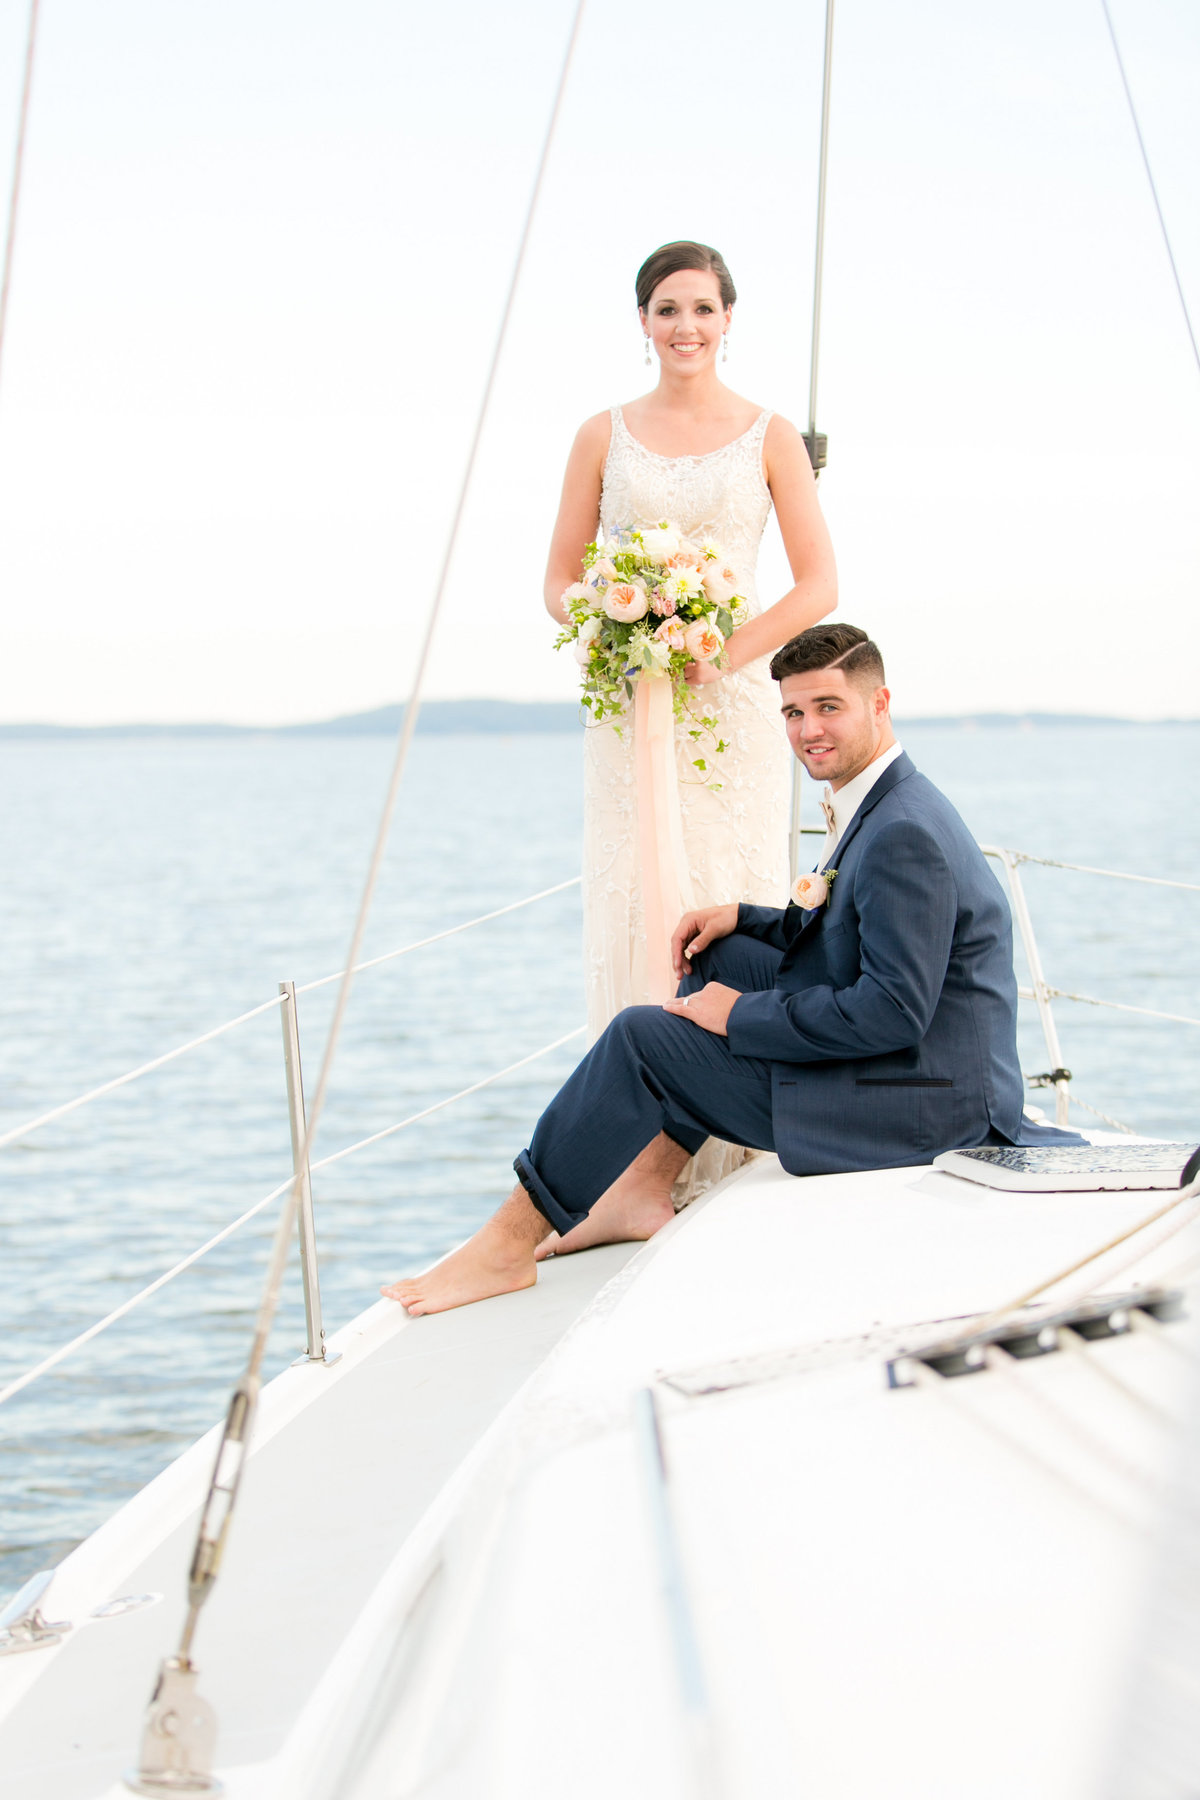 Wedding-on-a-boat-photos